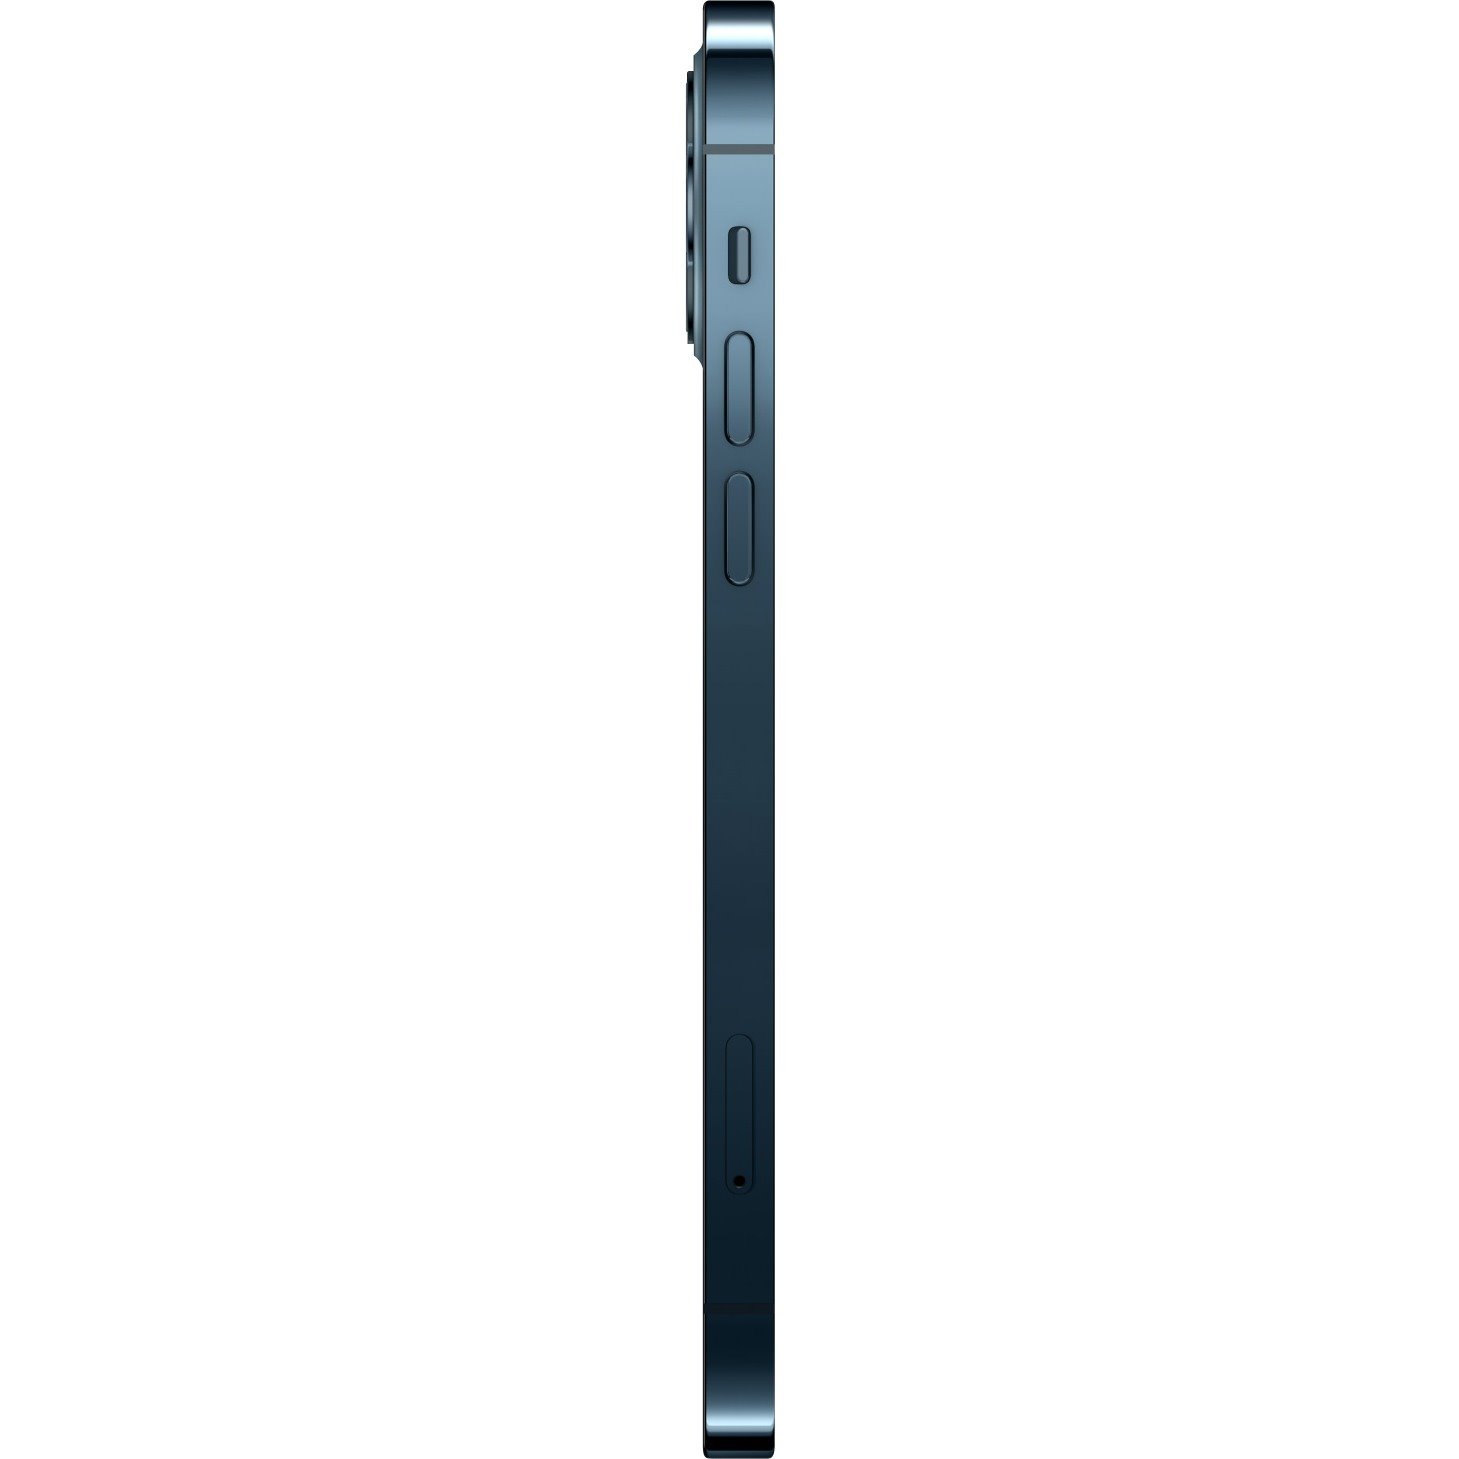 Apple iPhone 12 Pro A2341 512 GB Smartphone - 6.1" OLED 2532 x 1170 - Hexa-core (6 Core) - 6 GB RAM - iOS 14 - 5G - Pacific Blue